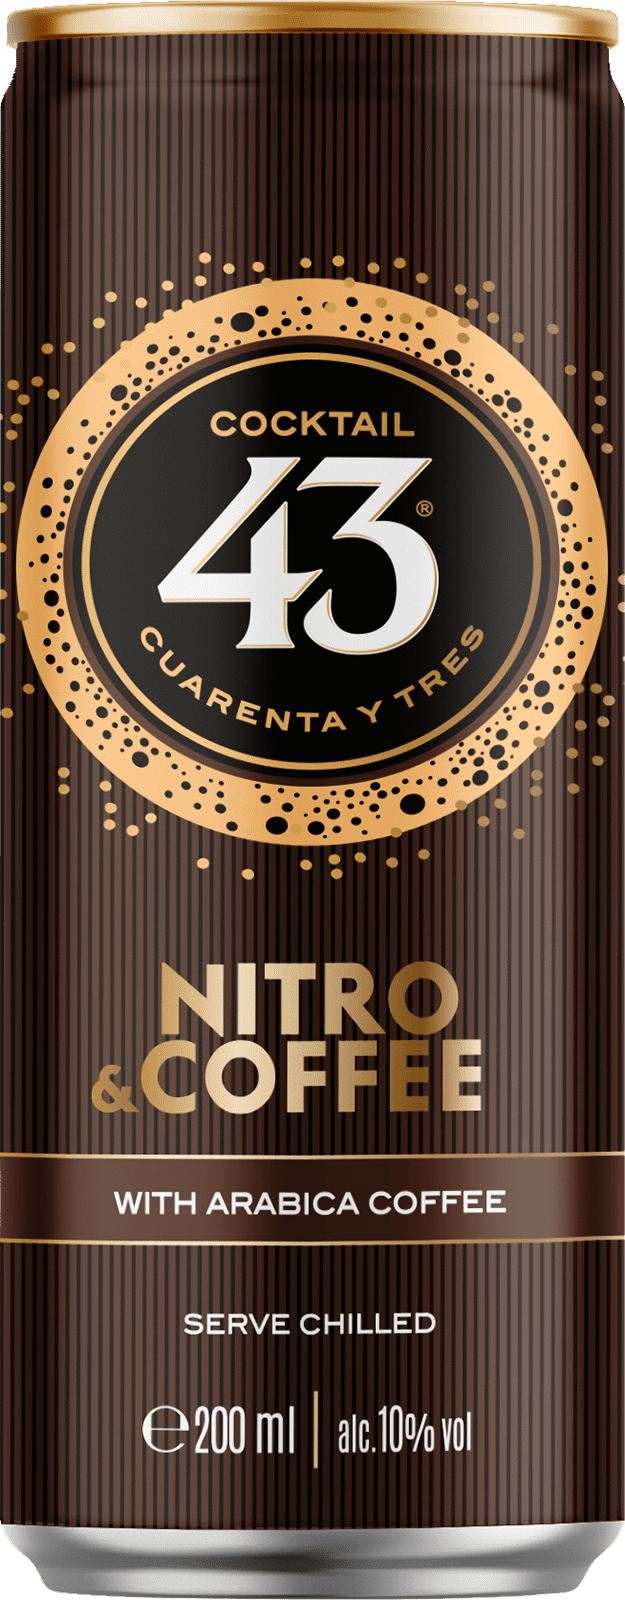 Cocktail 43 Nitro & Coffee (1 x 0.2 l)